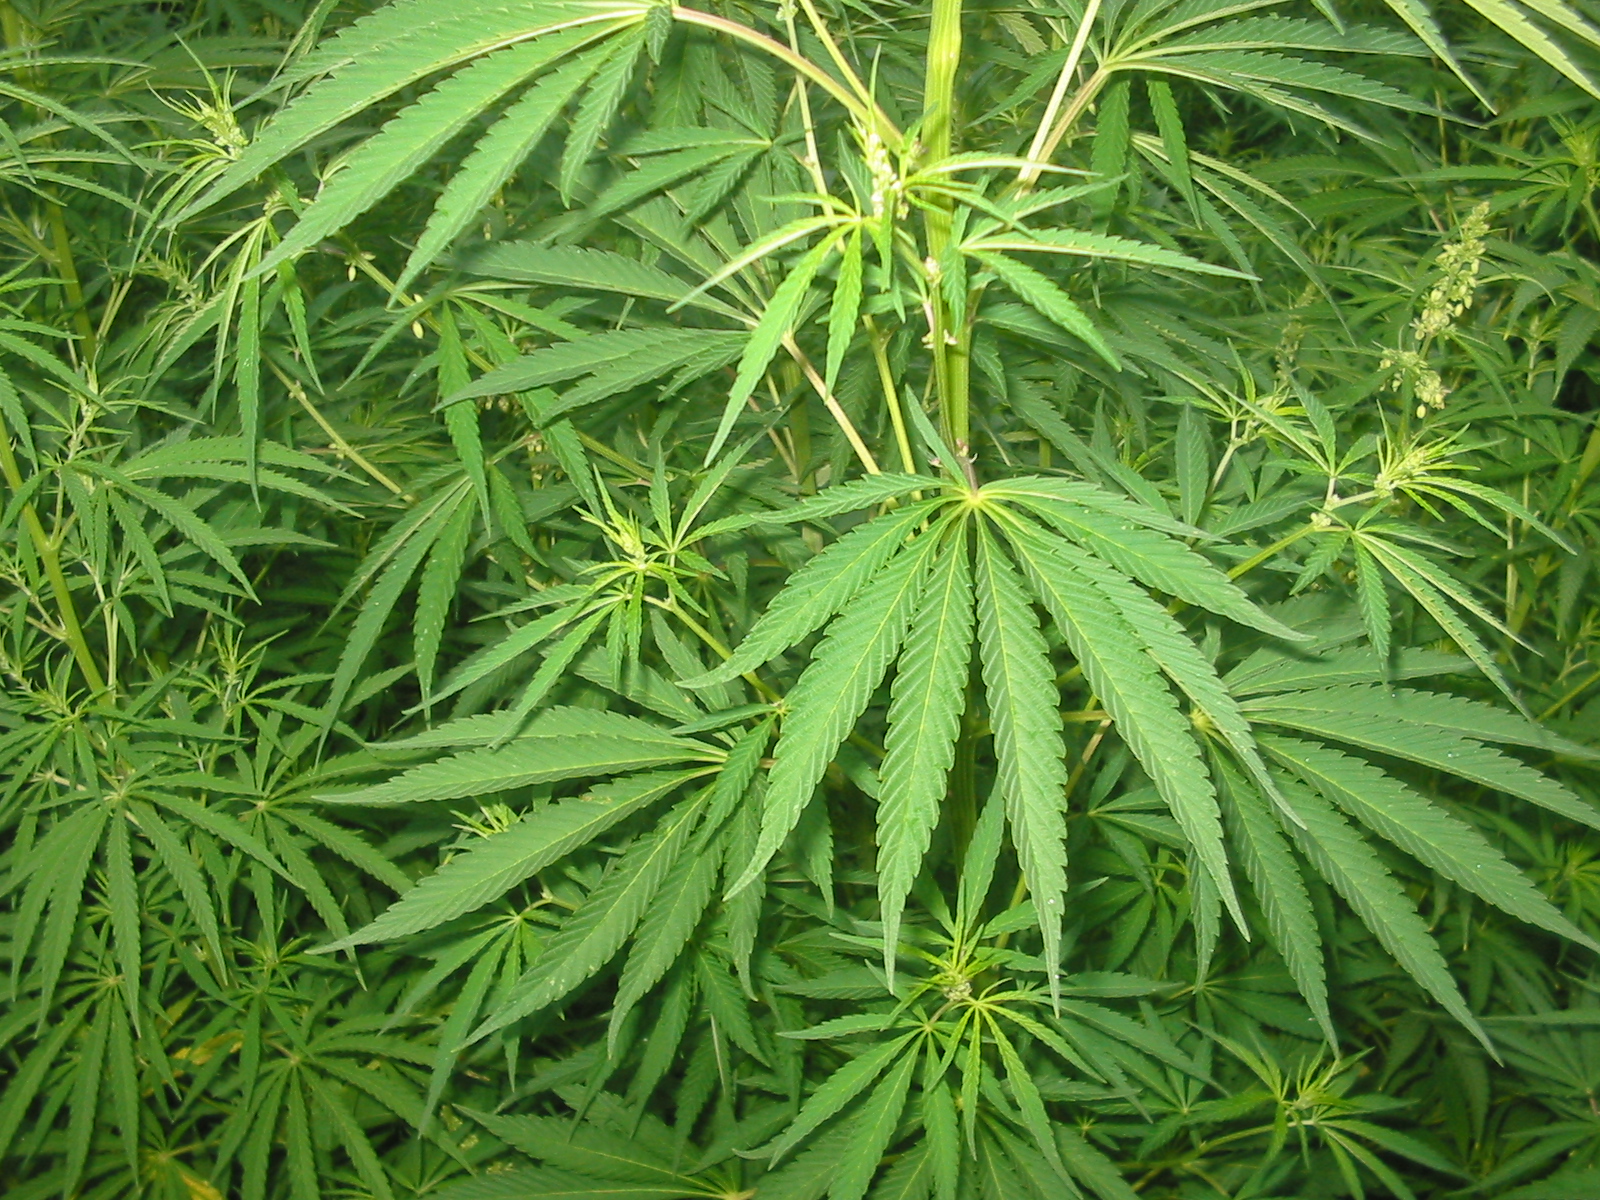 Sativa Cannabis Strains